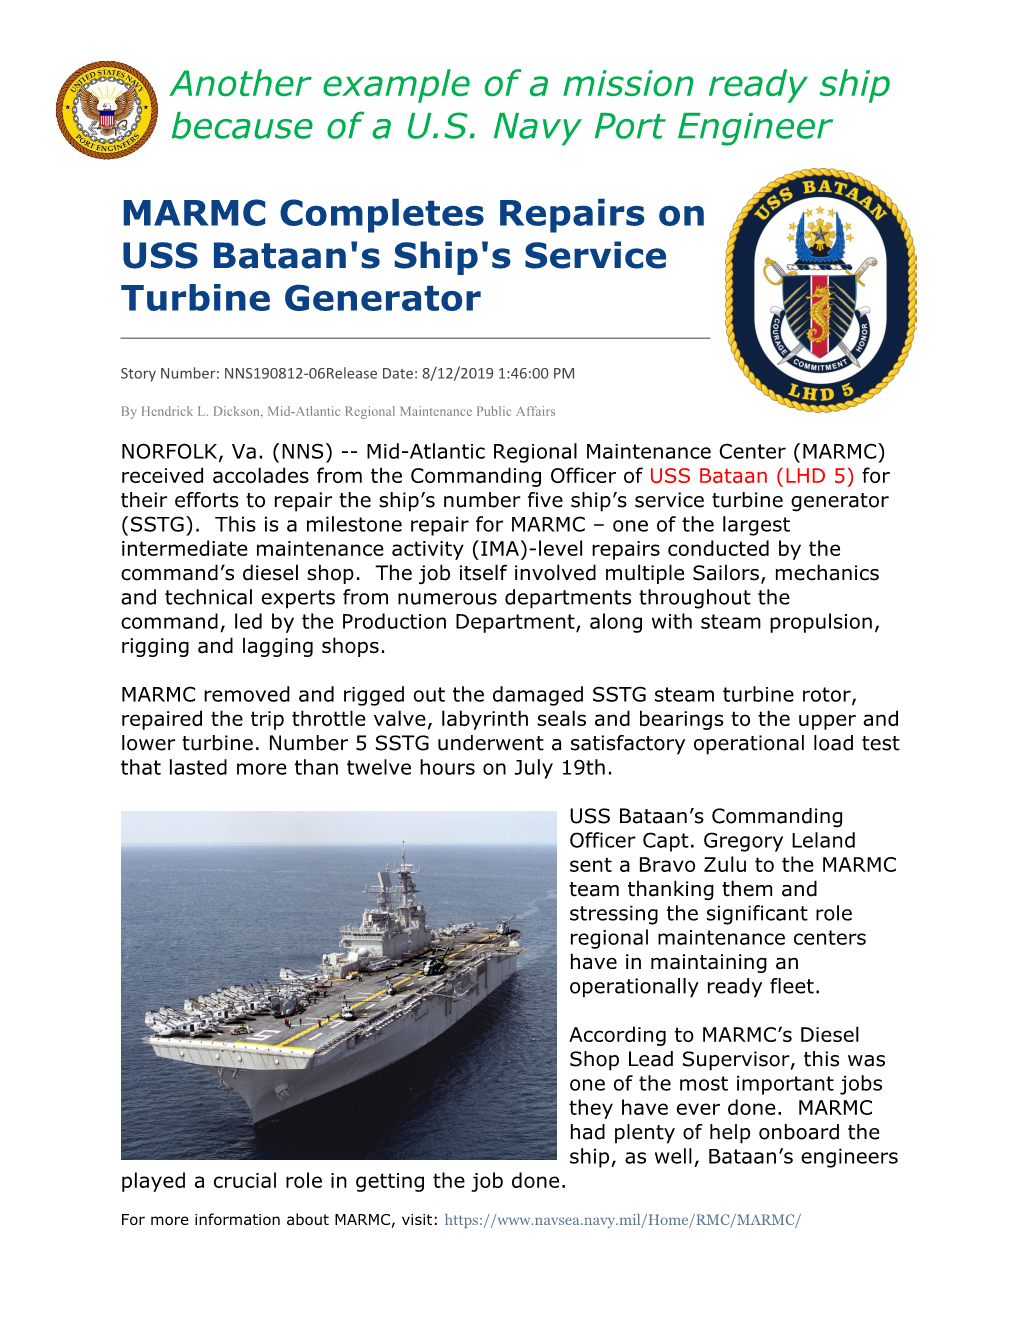 USS Bataan's Ship's Service Turbine Generator